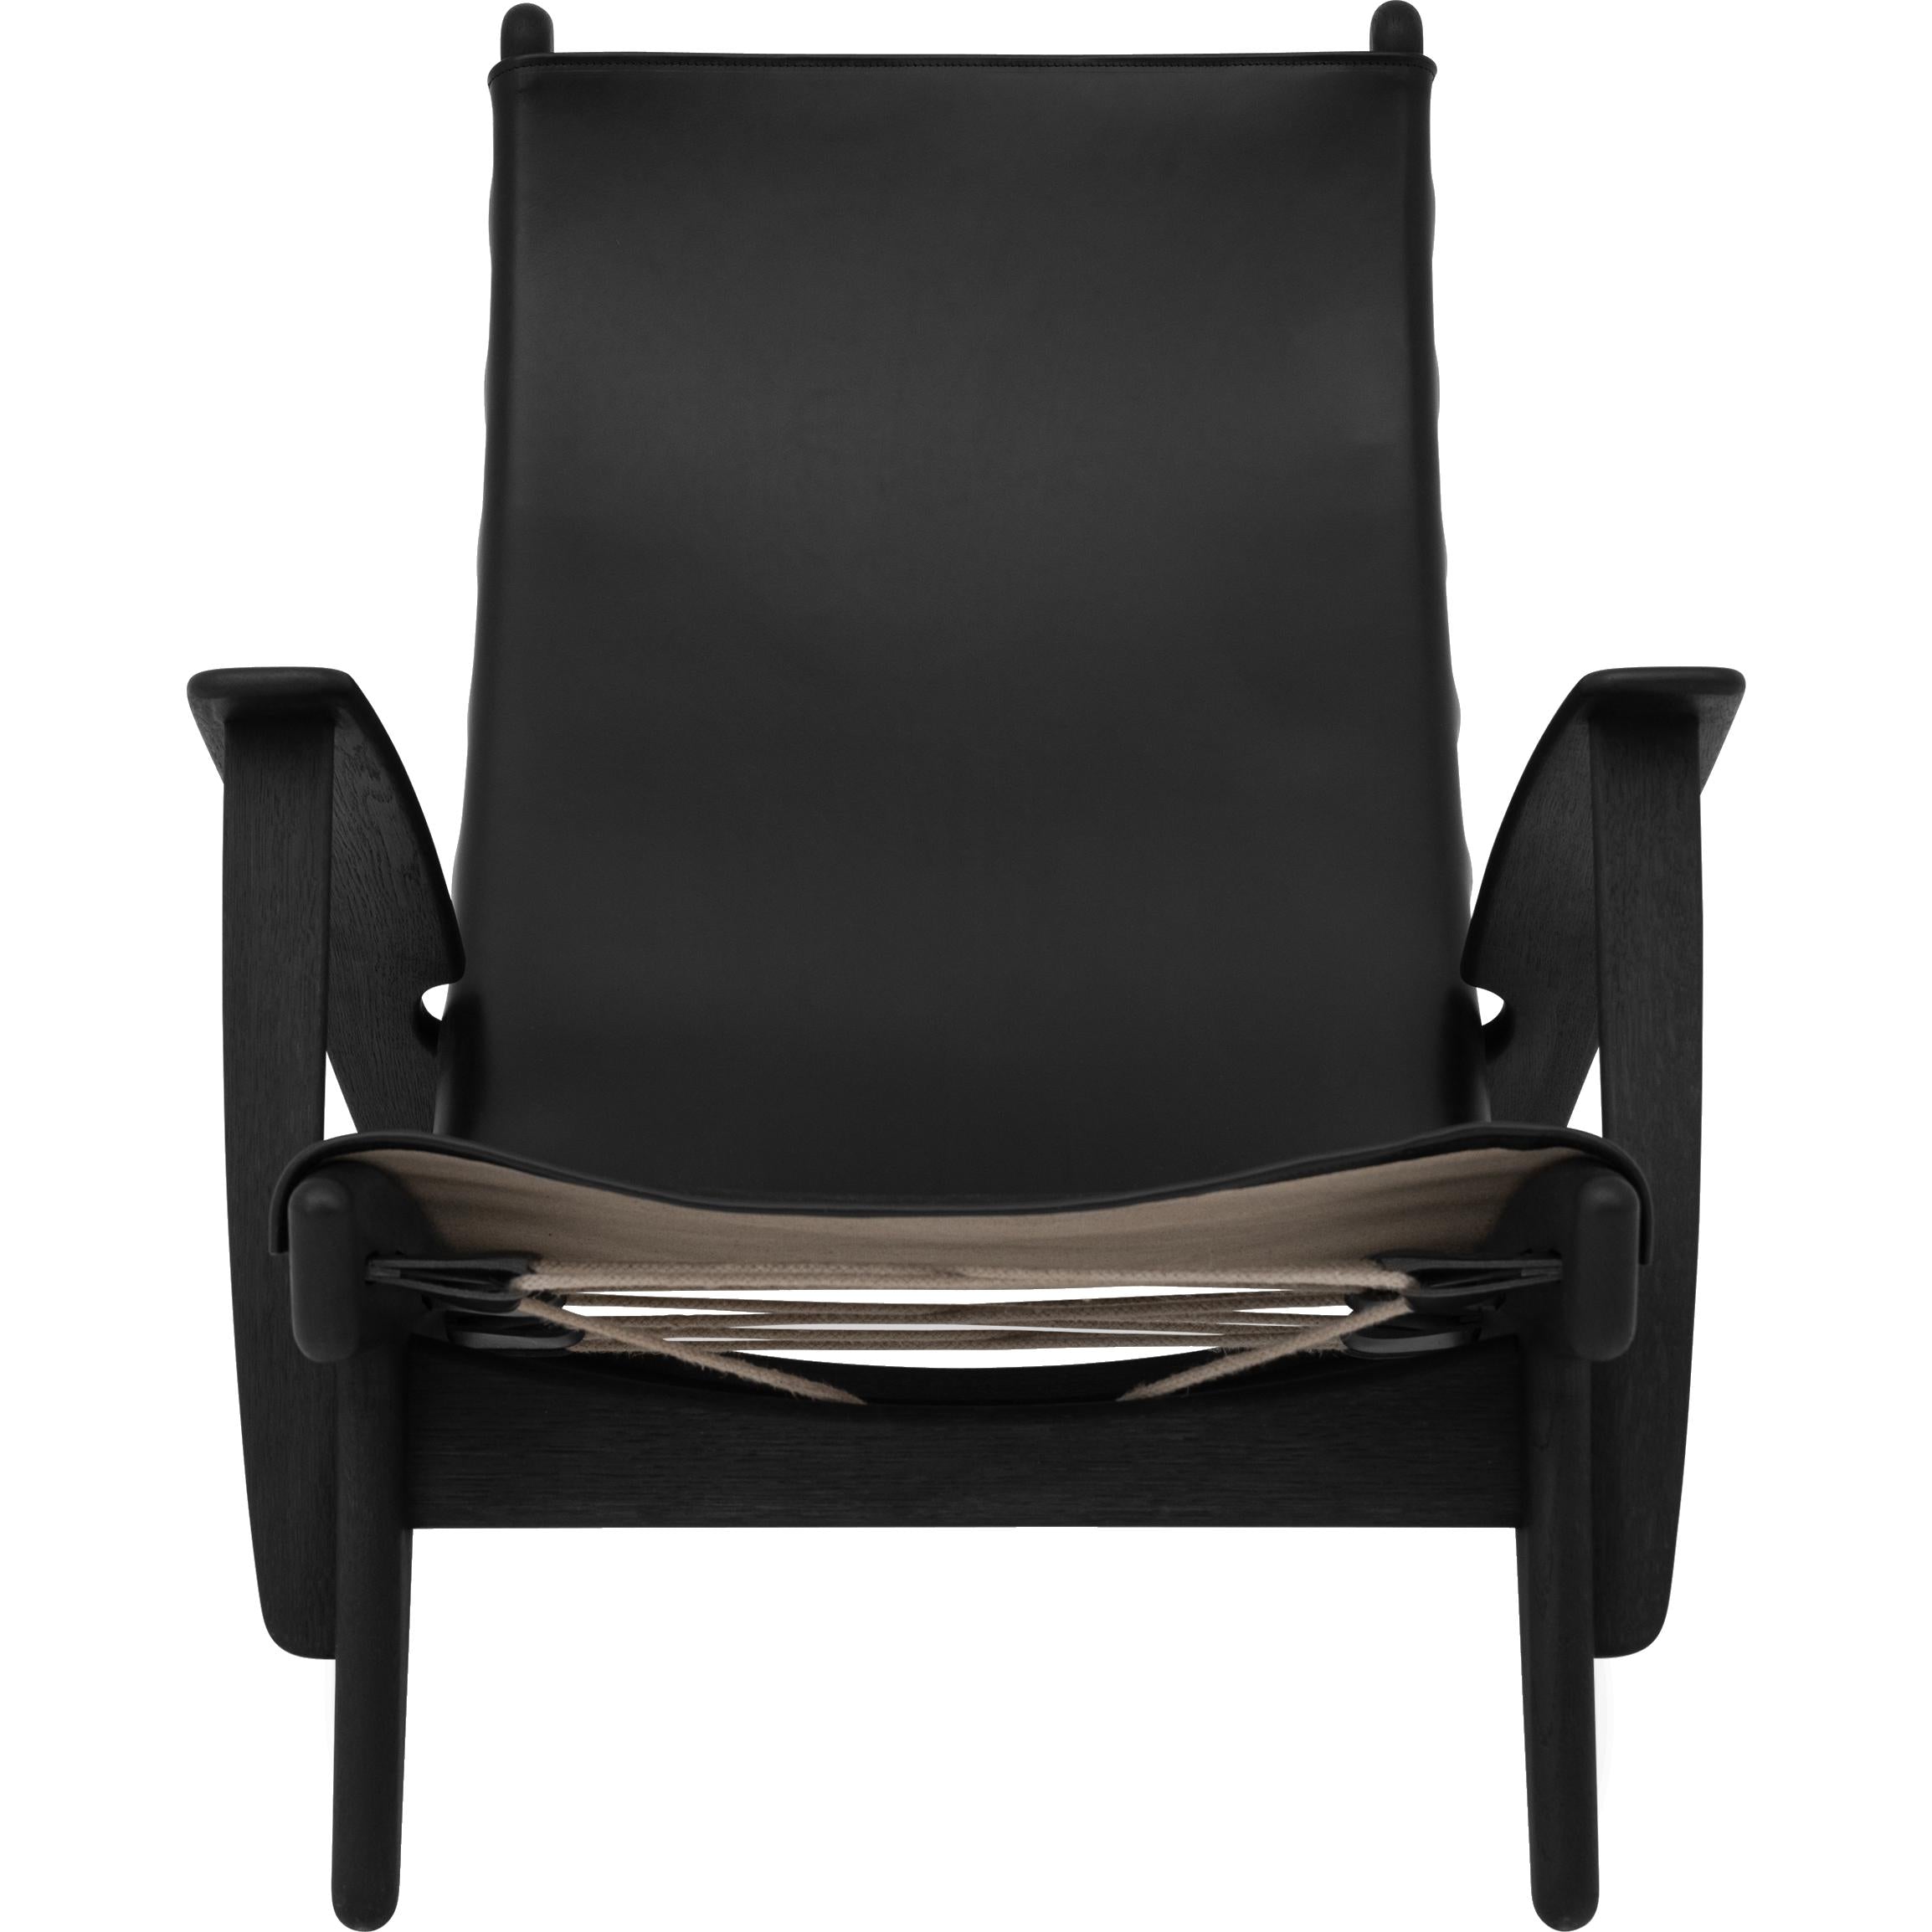 Klassik Studio PV King's Chair Black Eiche Bunt, schwarzes Leder